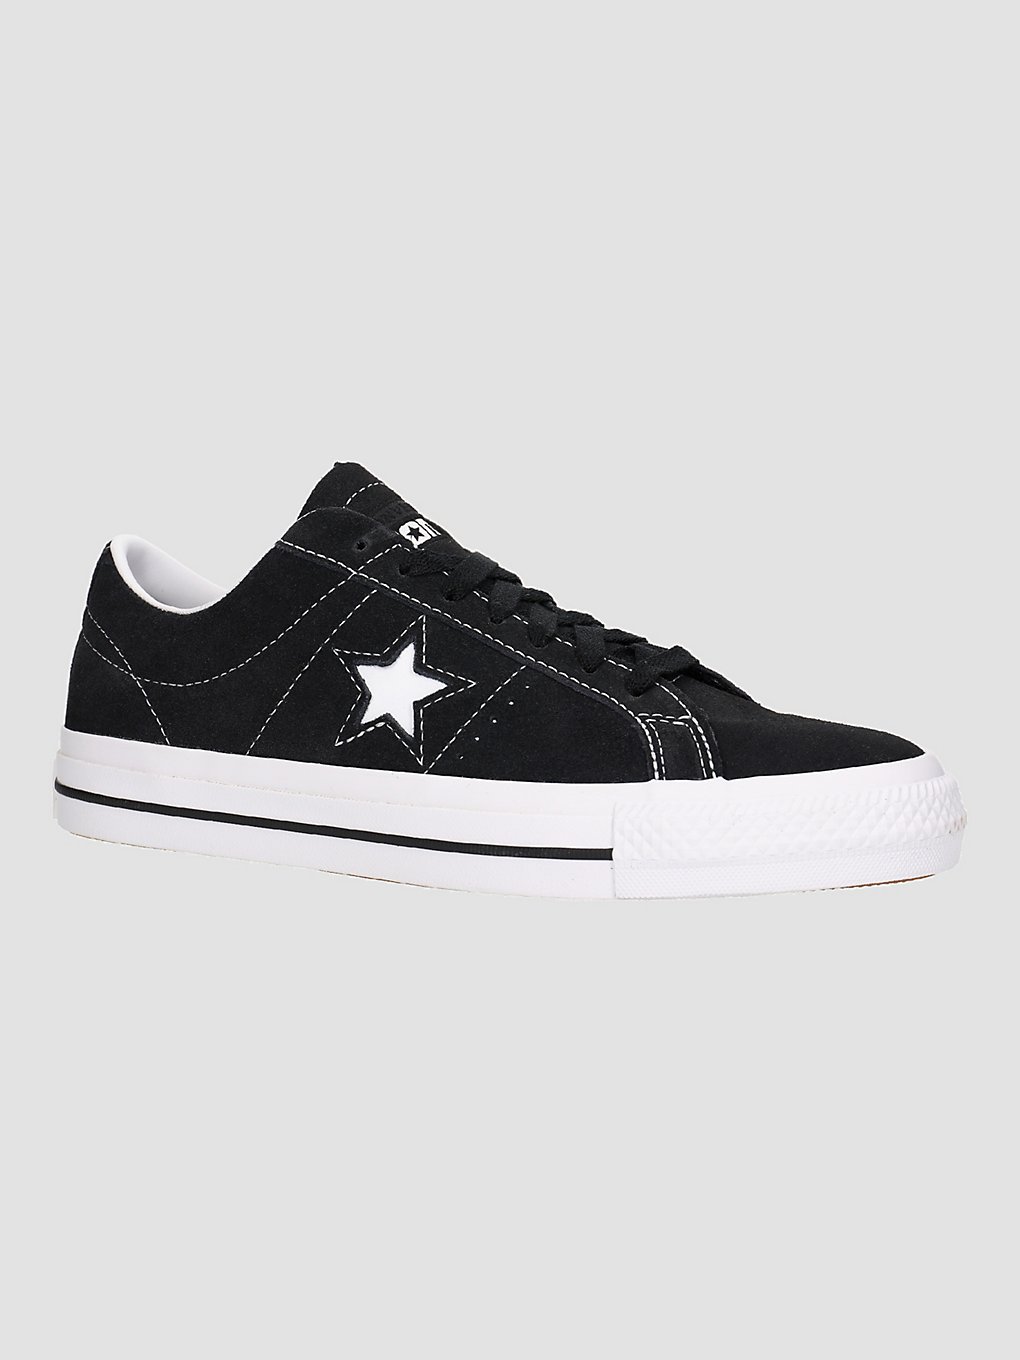 converse one star pro skateschuhe white